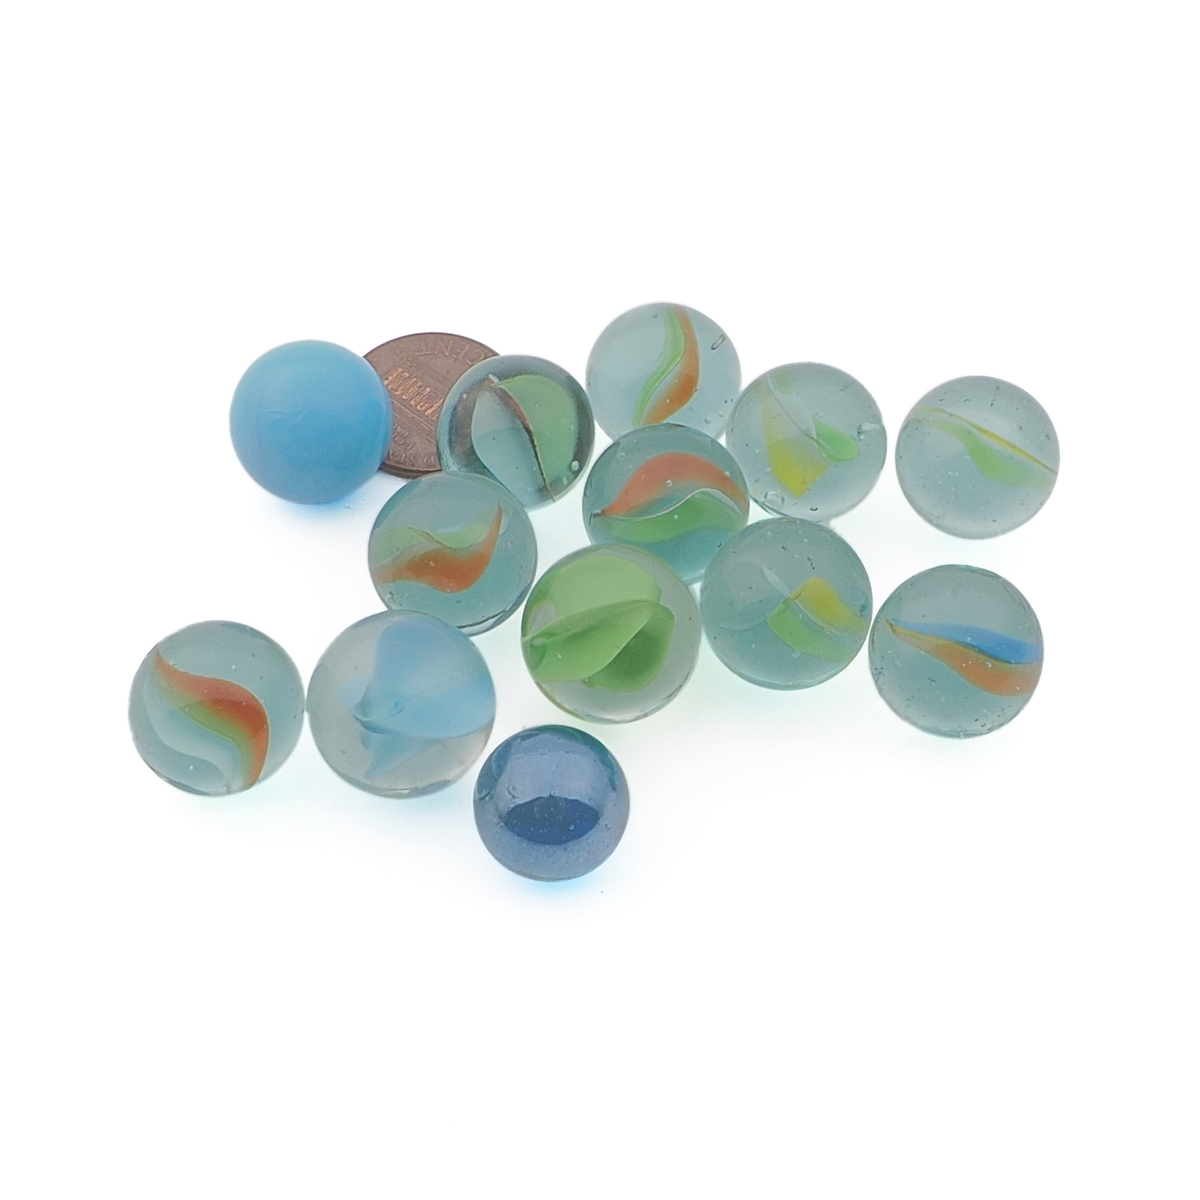 Lot (13) vintage German swirl core opaque metallic glass marbles toys